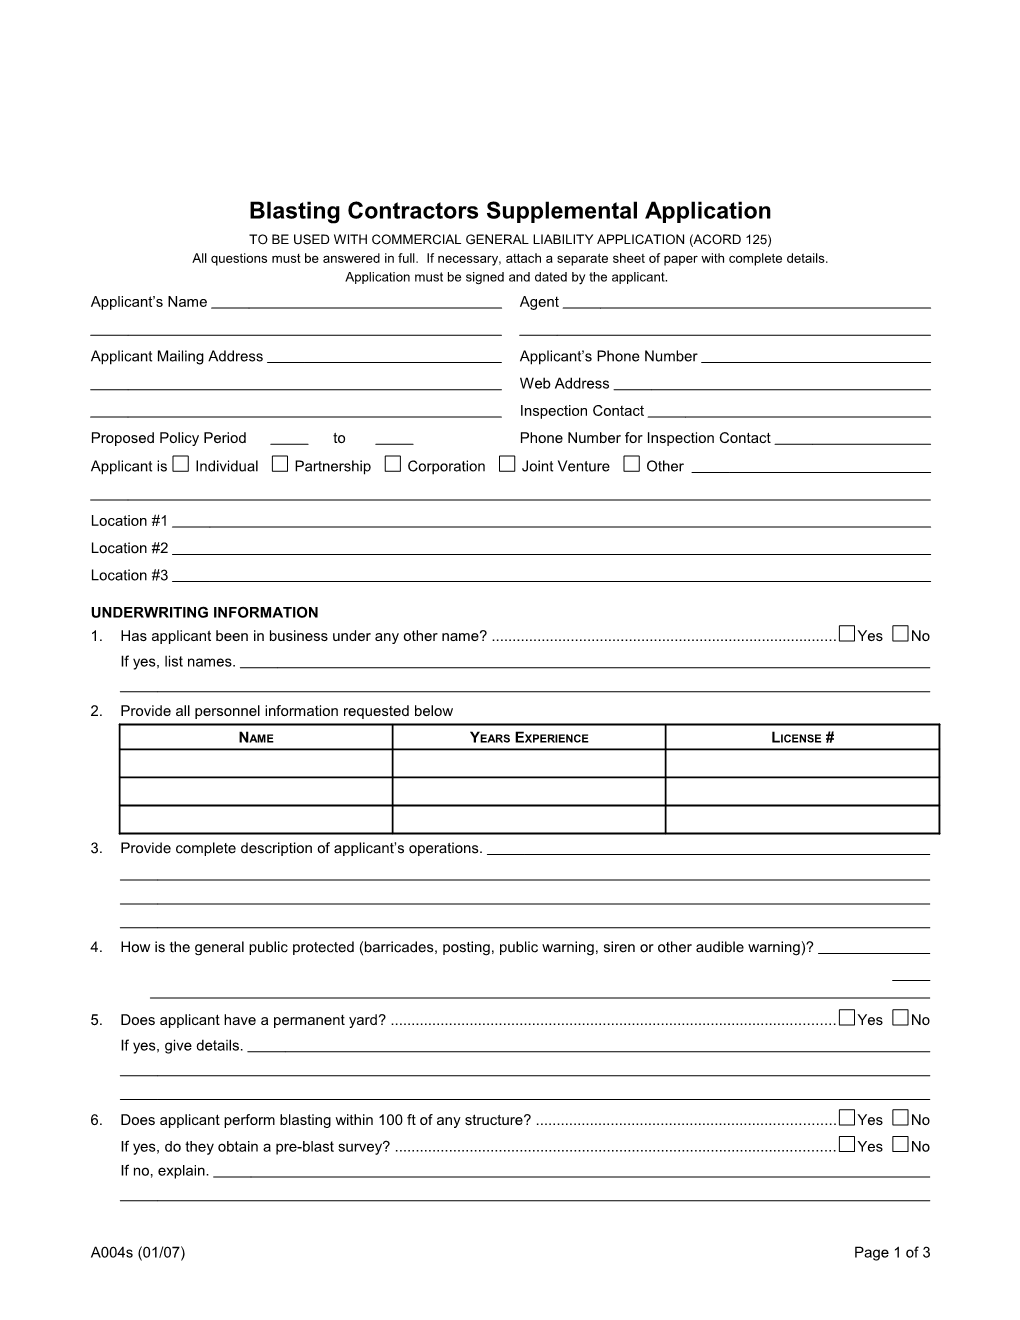 Blasting Contractors Supplemental Application